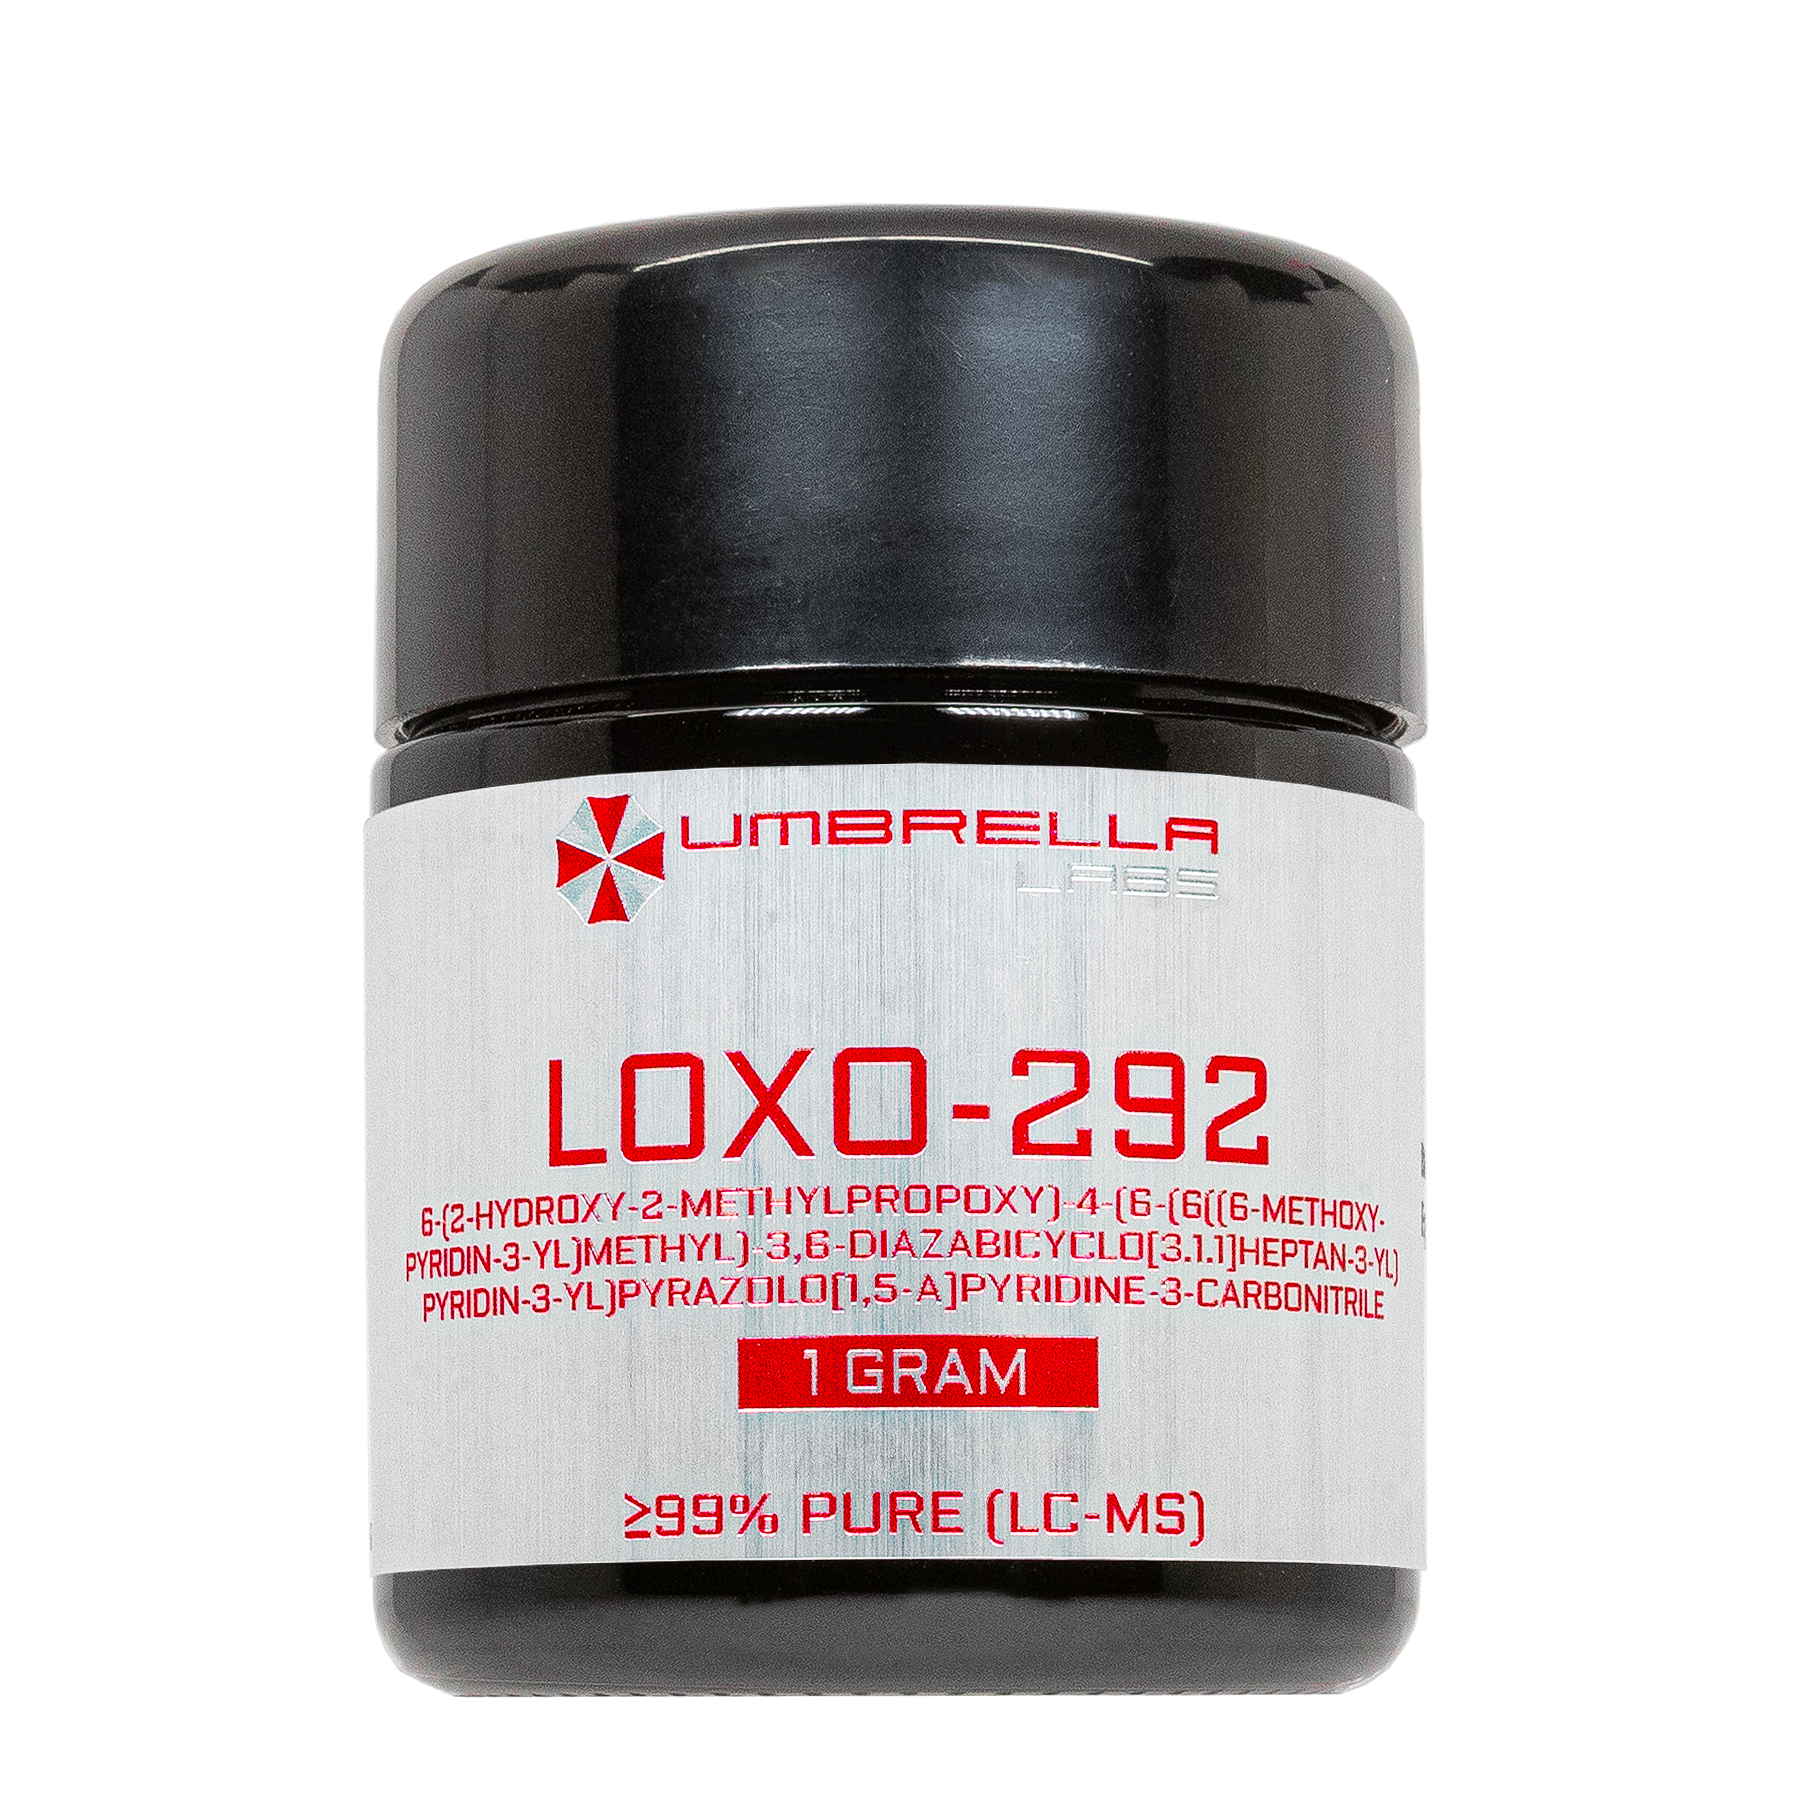 loxo 292 powder (1 gram)